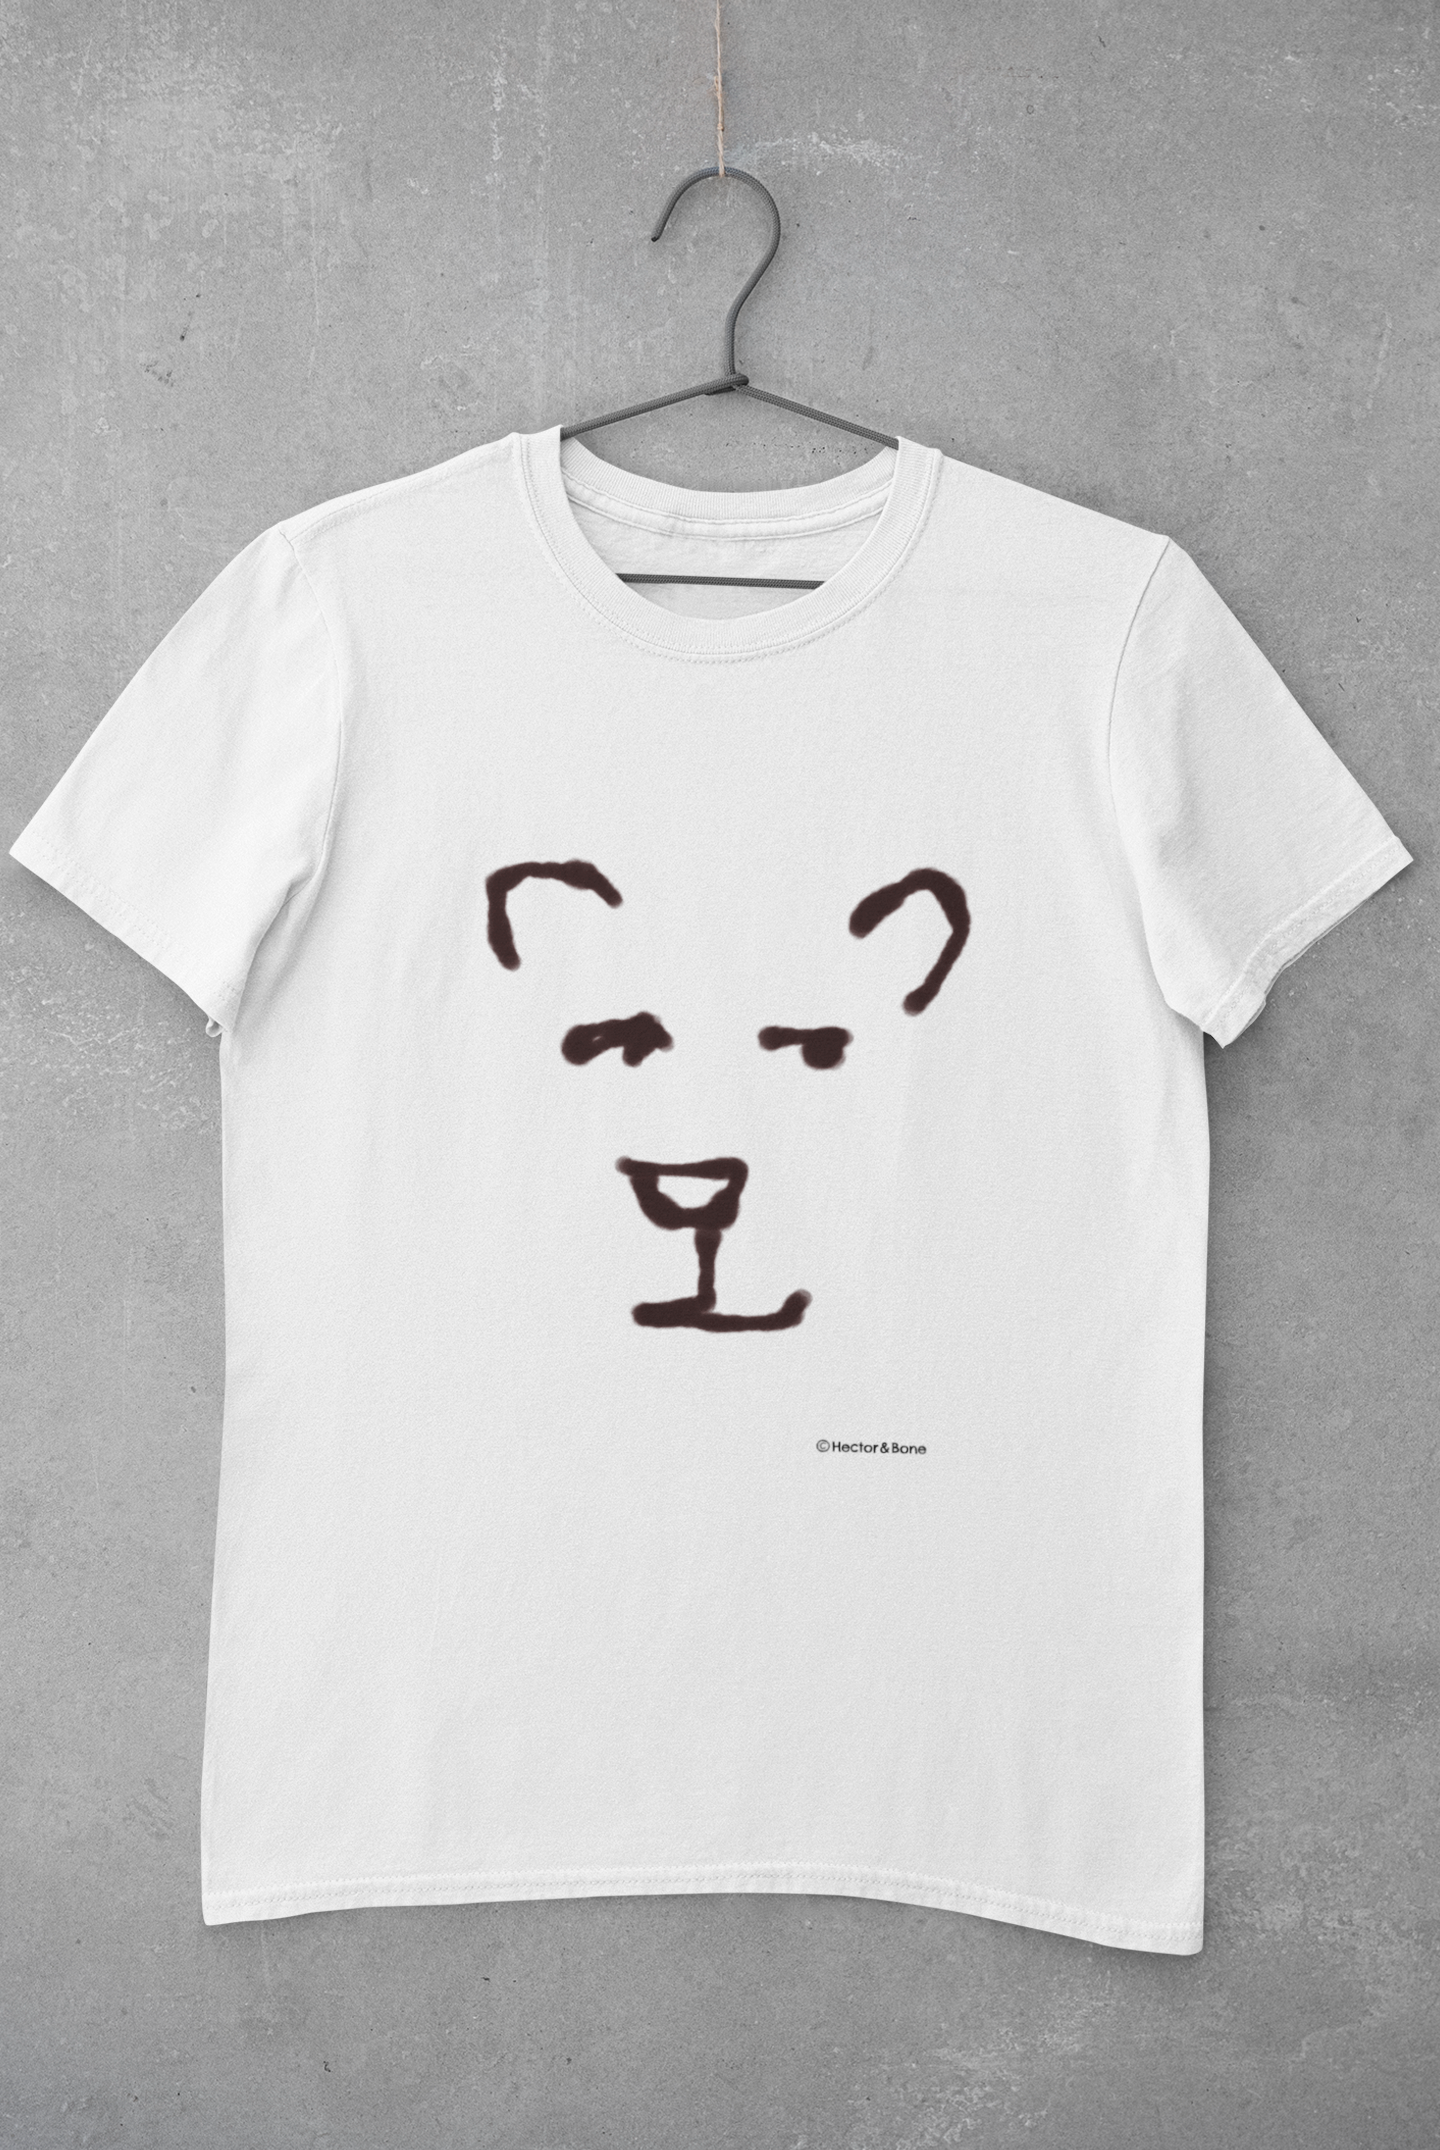 Polar Bear T-shirt - Cute illustrated Polar Bear face design on white vegan cotton t-shirts by Hector and Bone